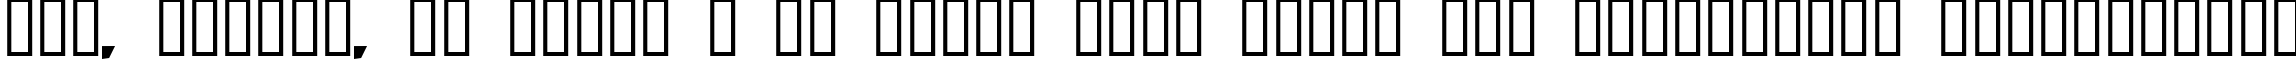 Пример написания шрифтом ROBO текста на украинском